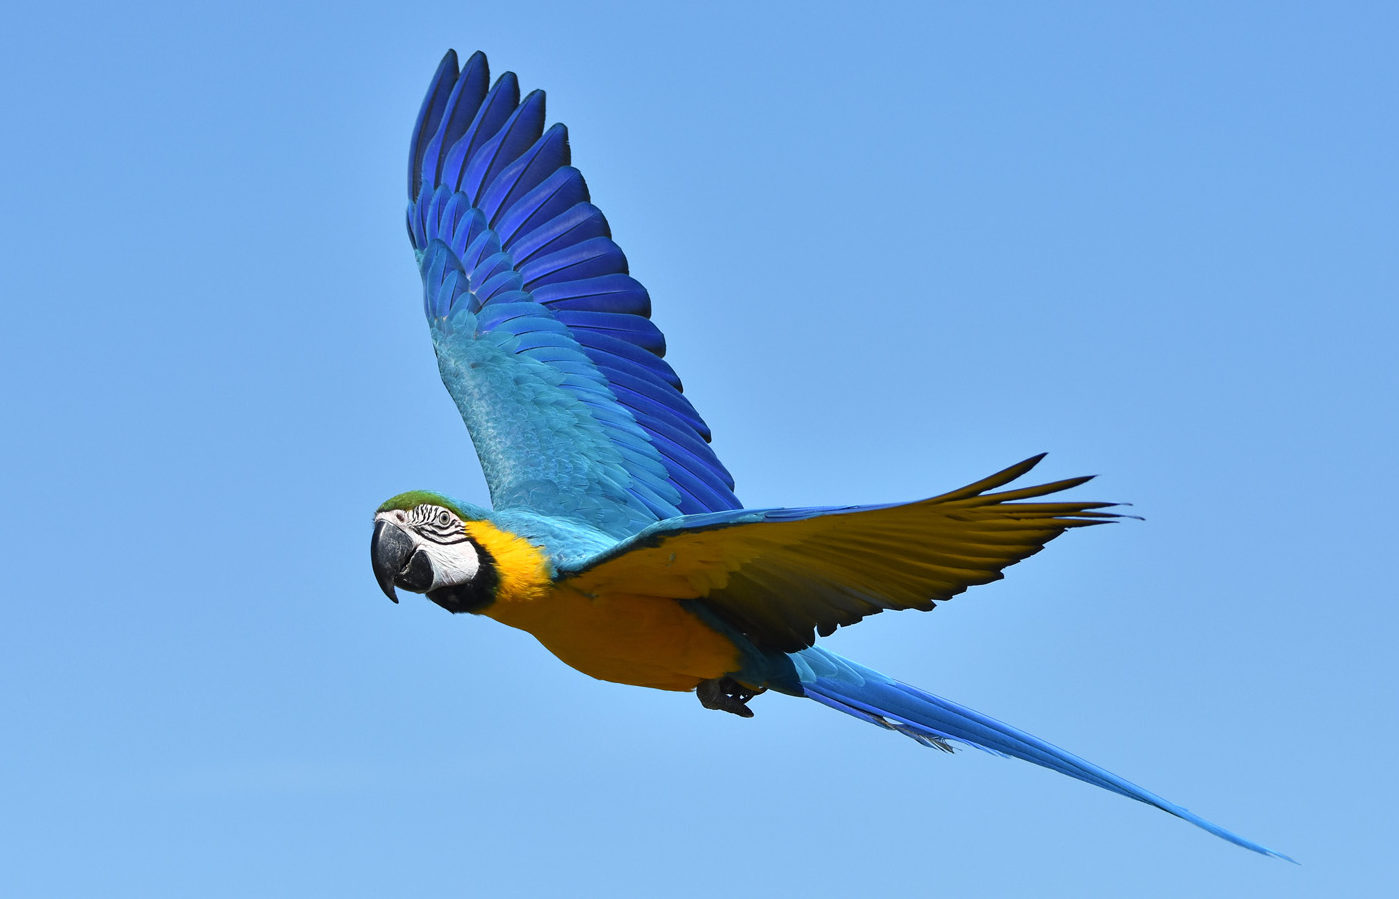 A vibrant blue macaw soars through a beautiful blue sky.